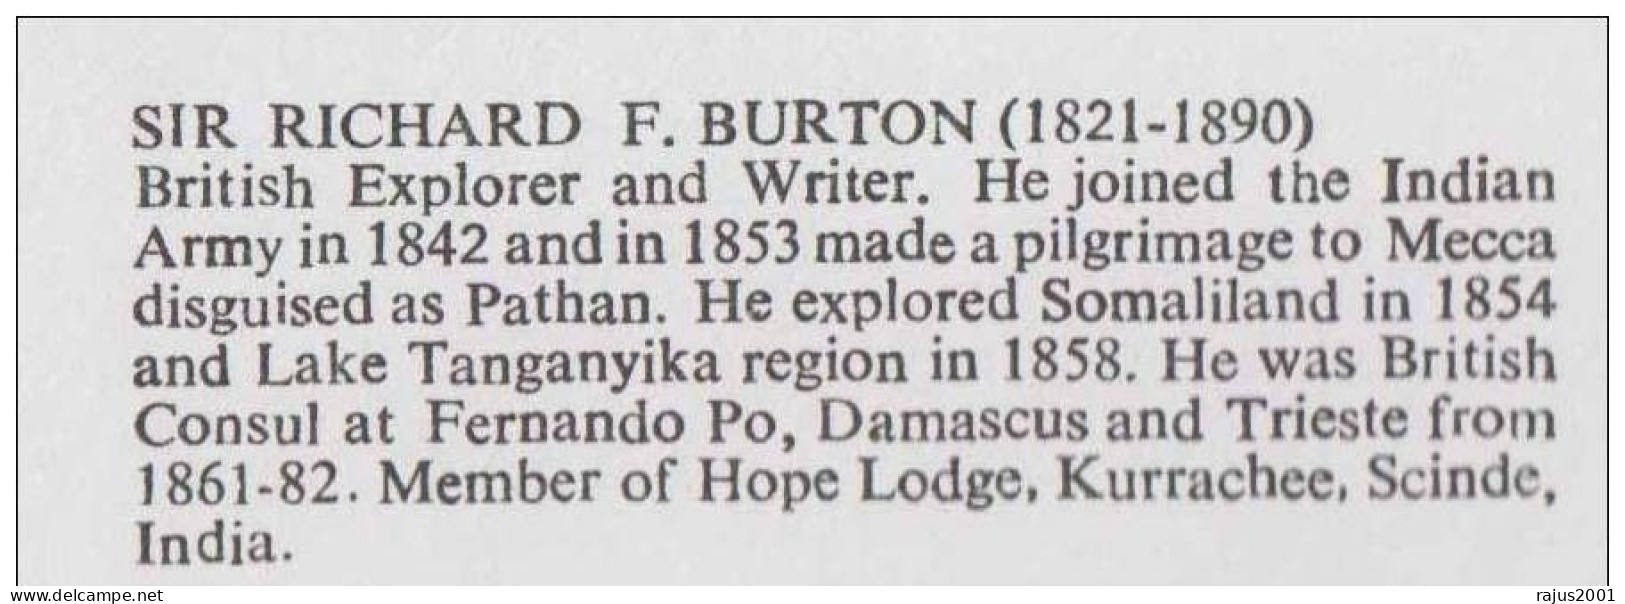 Richard F Burton Explorer Made Pilgrimage To Mecca Disguise As Pathan, Member Of Hope Lodge Kurrachee / Karachi, Masonic - Vrijmetselarij